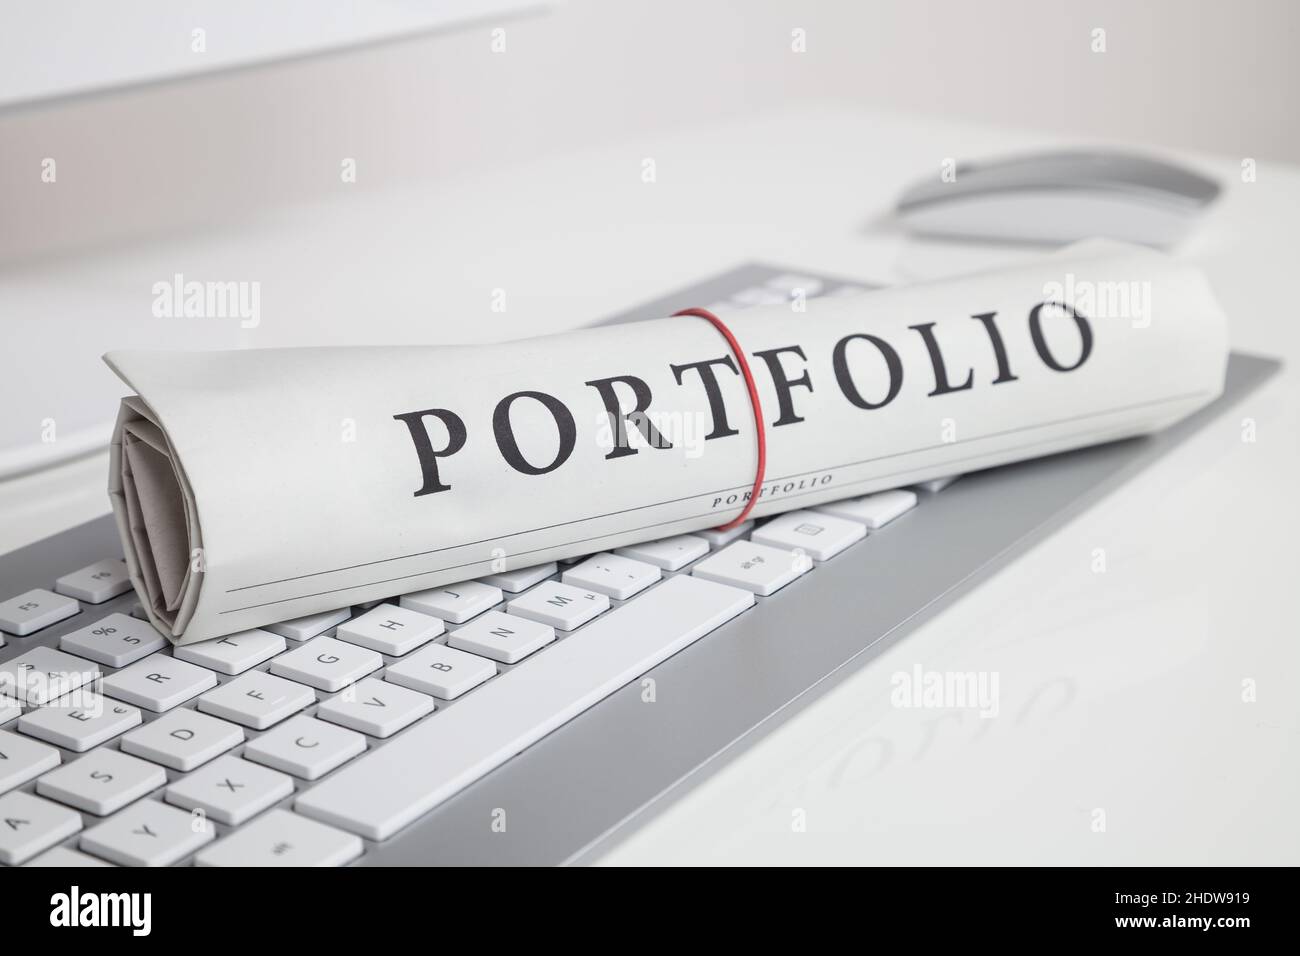 portfolio Stock Photo